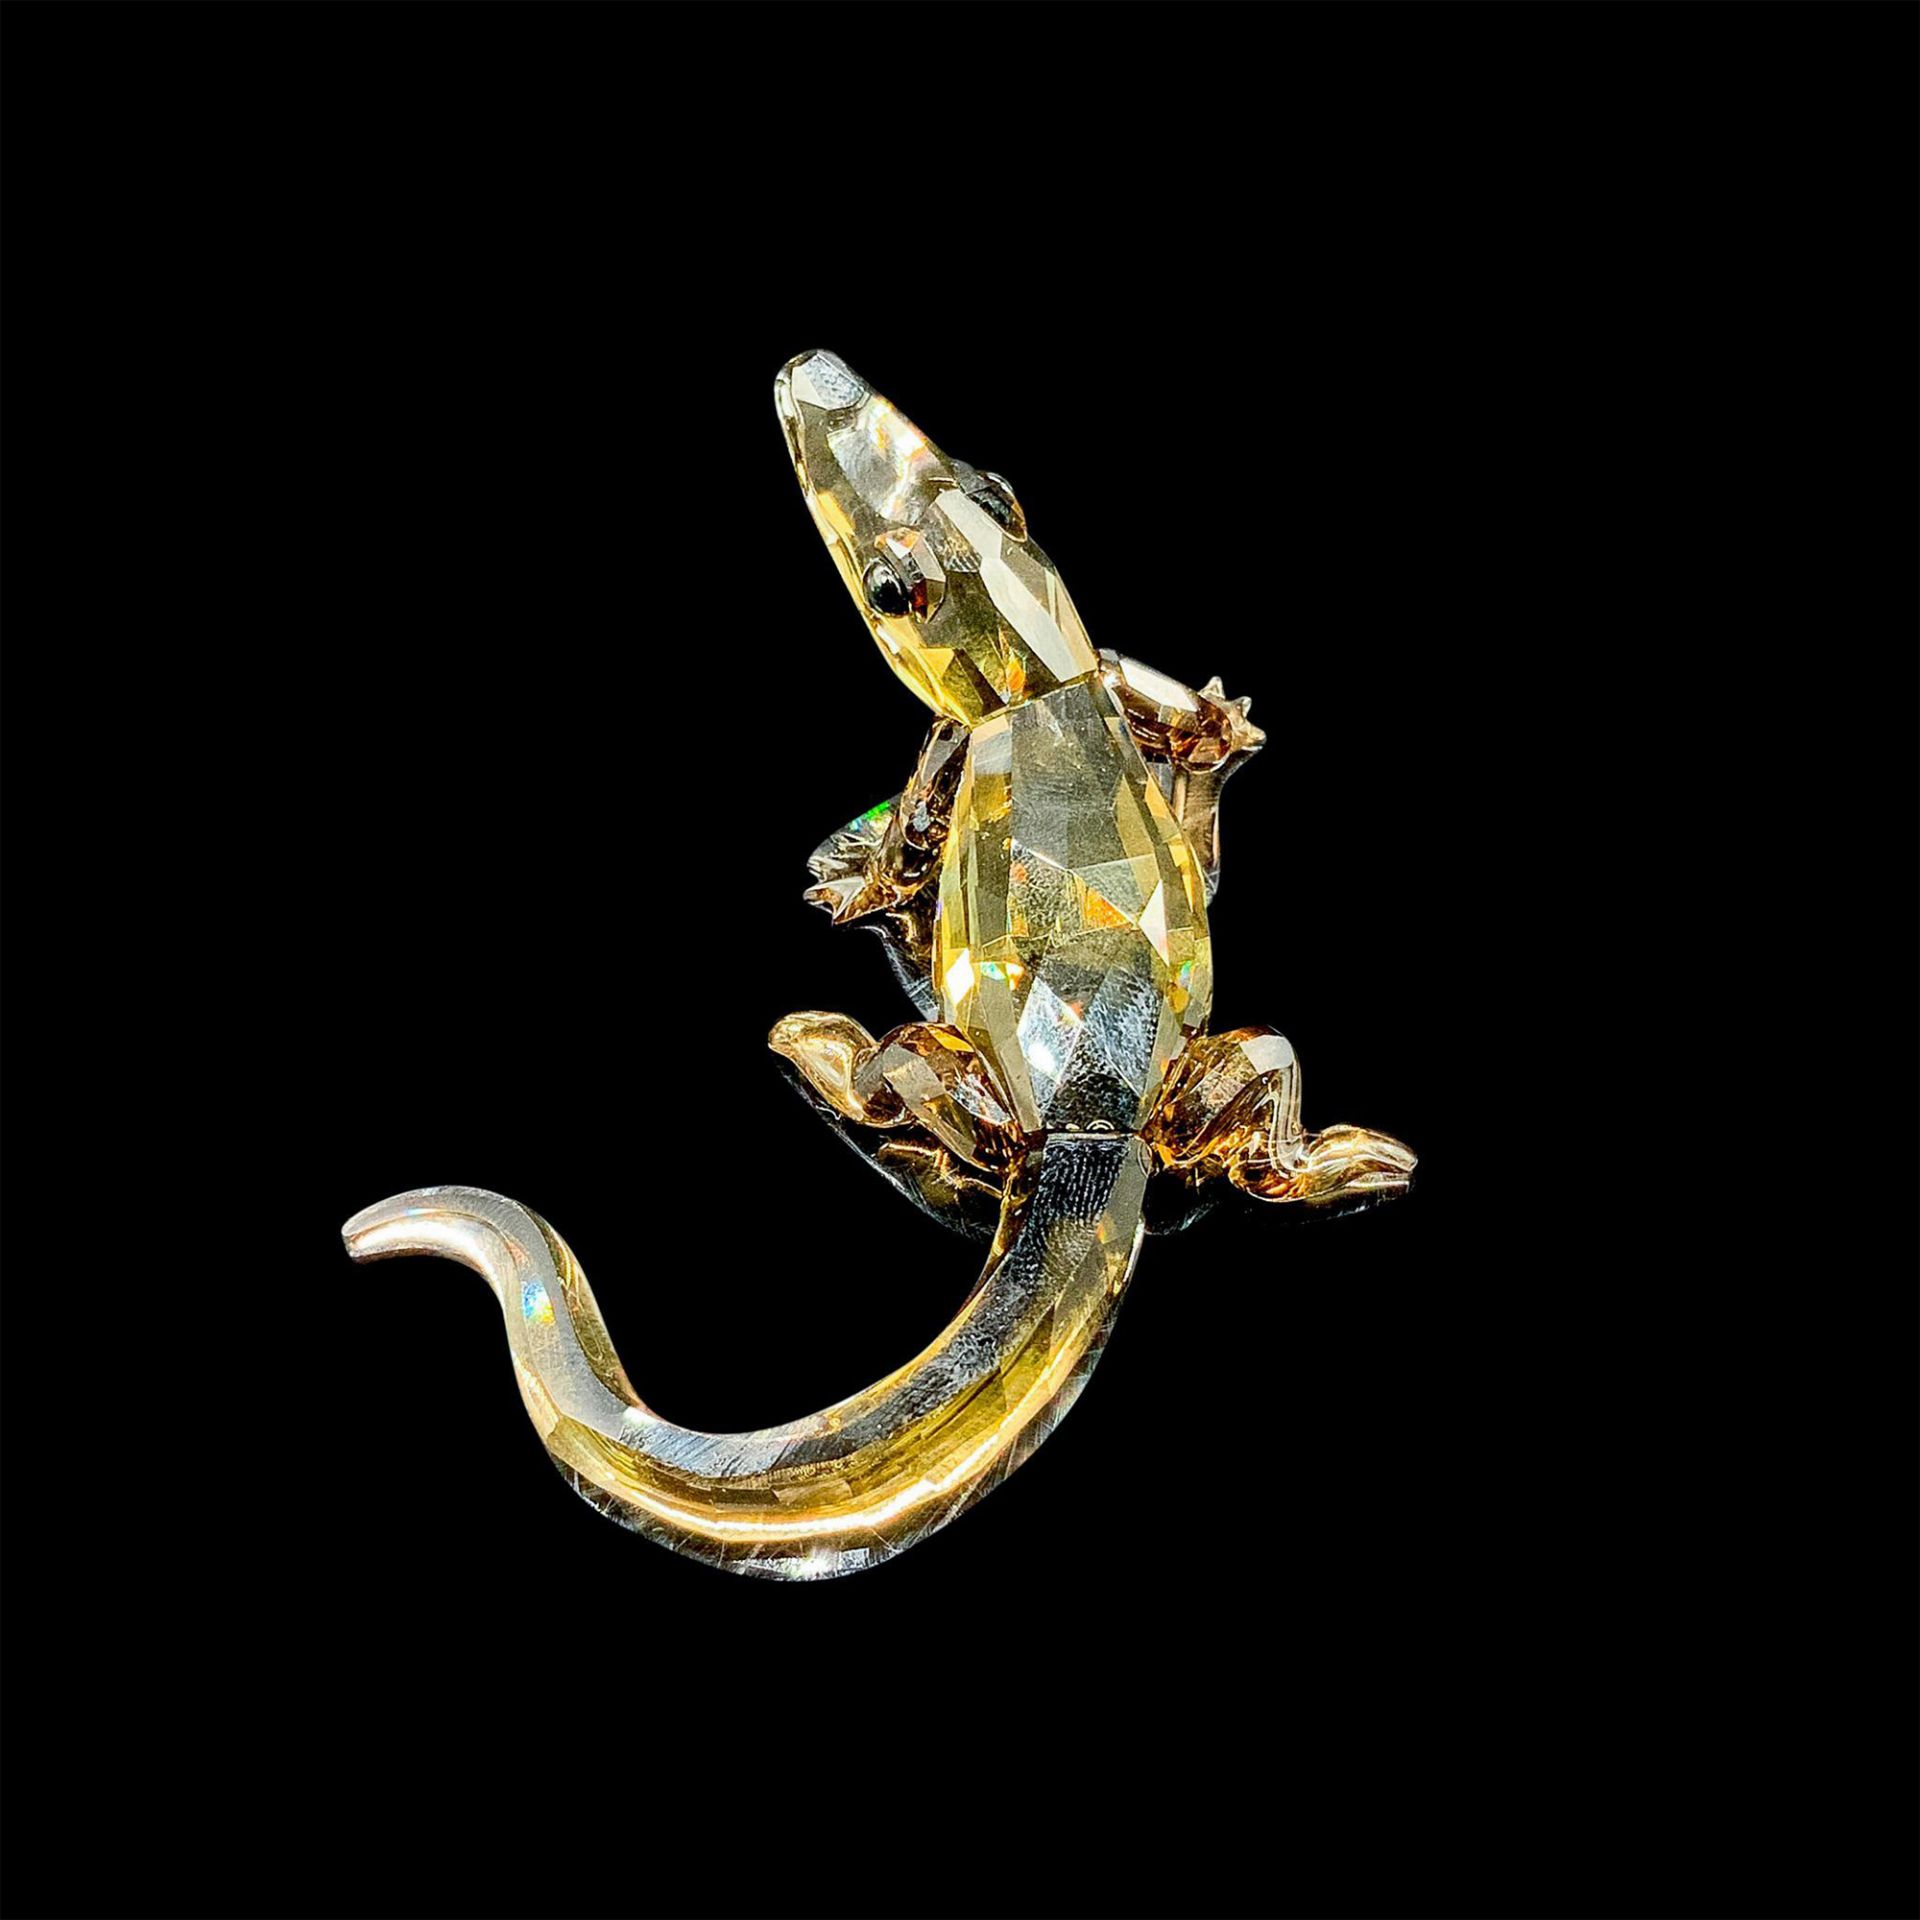 Swarovski Crystal Figurine, Baby Crocodile - Image 2 of 3